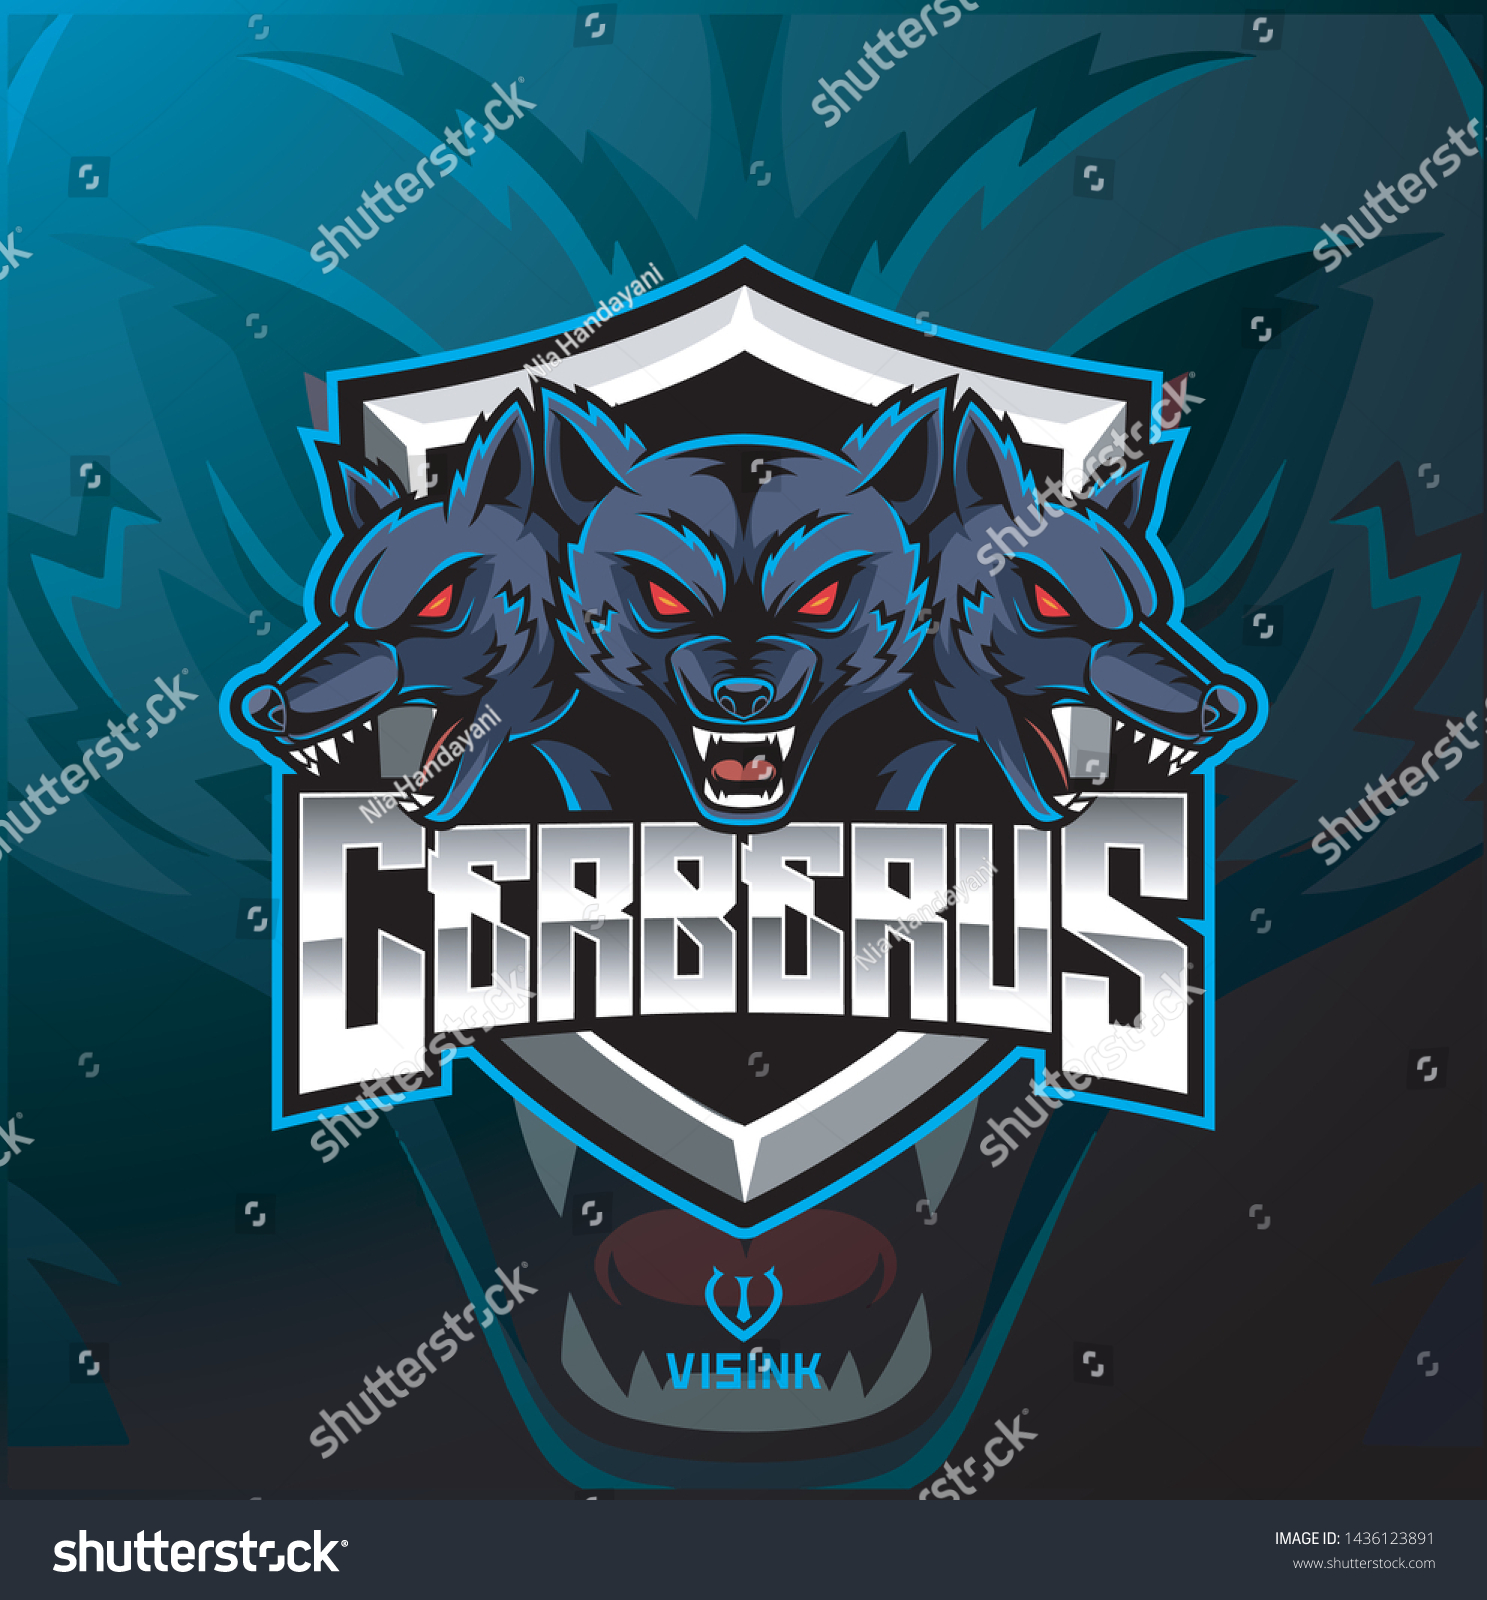 SVG of Three headed cerberus mascot logo design svg